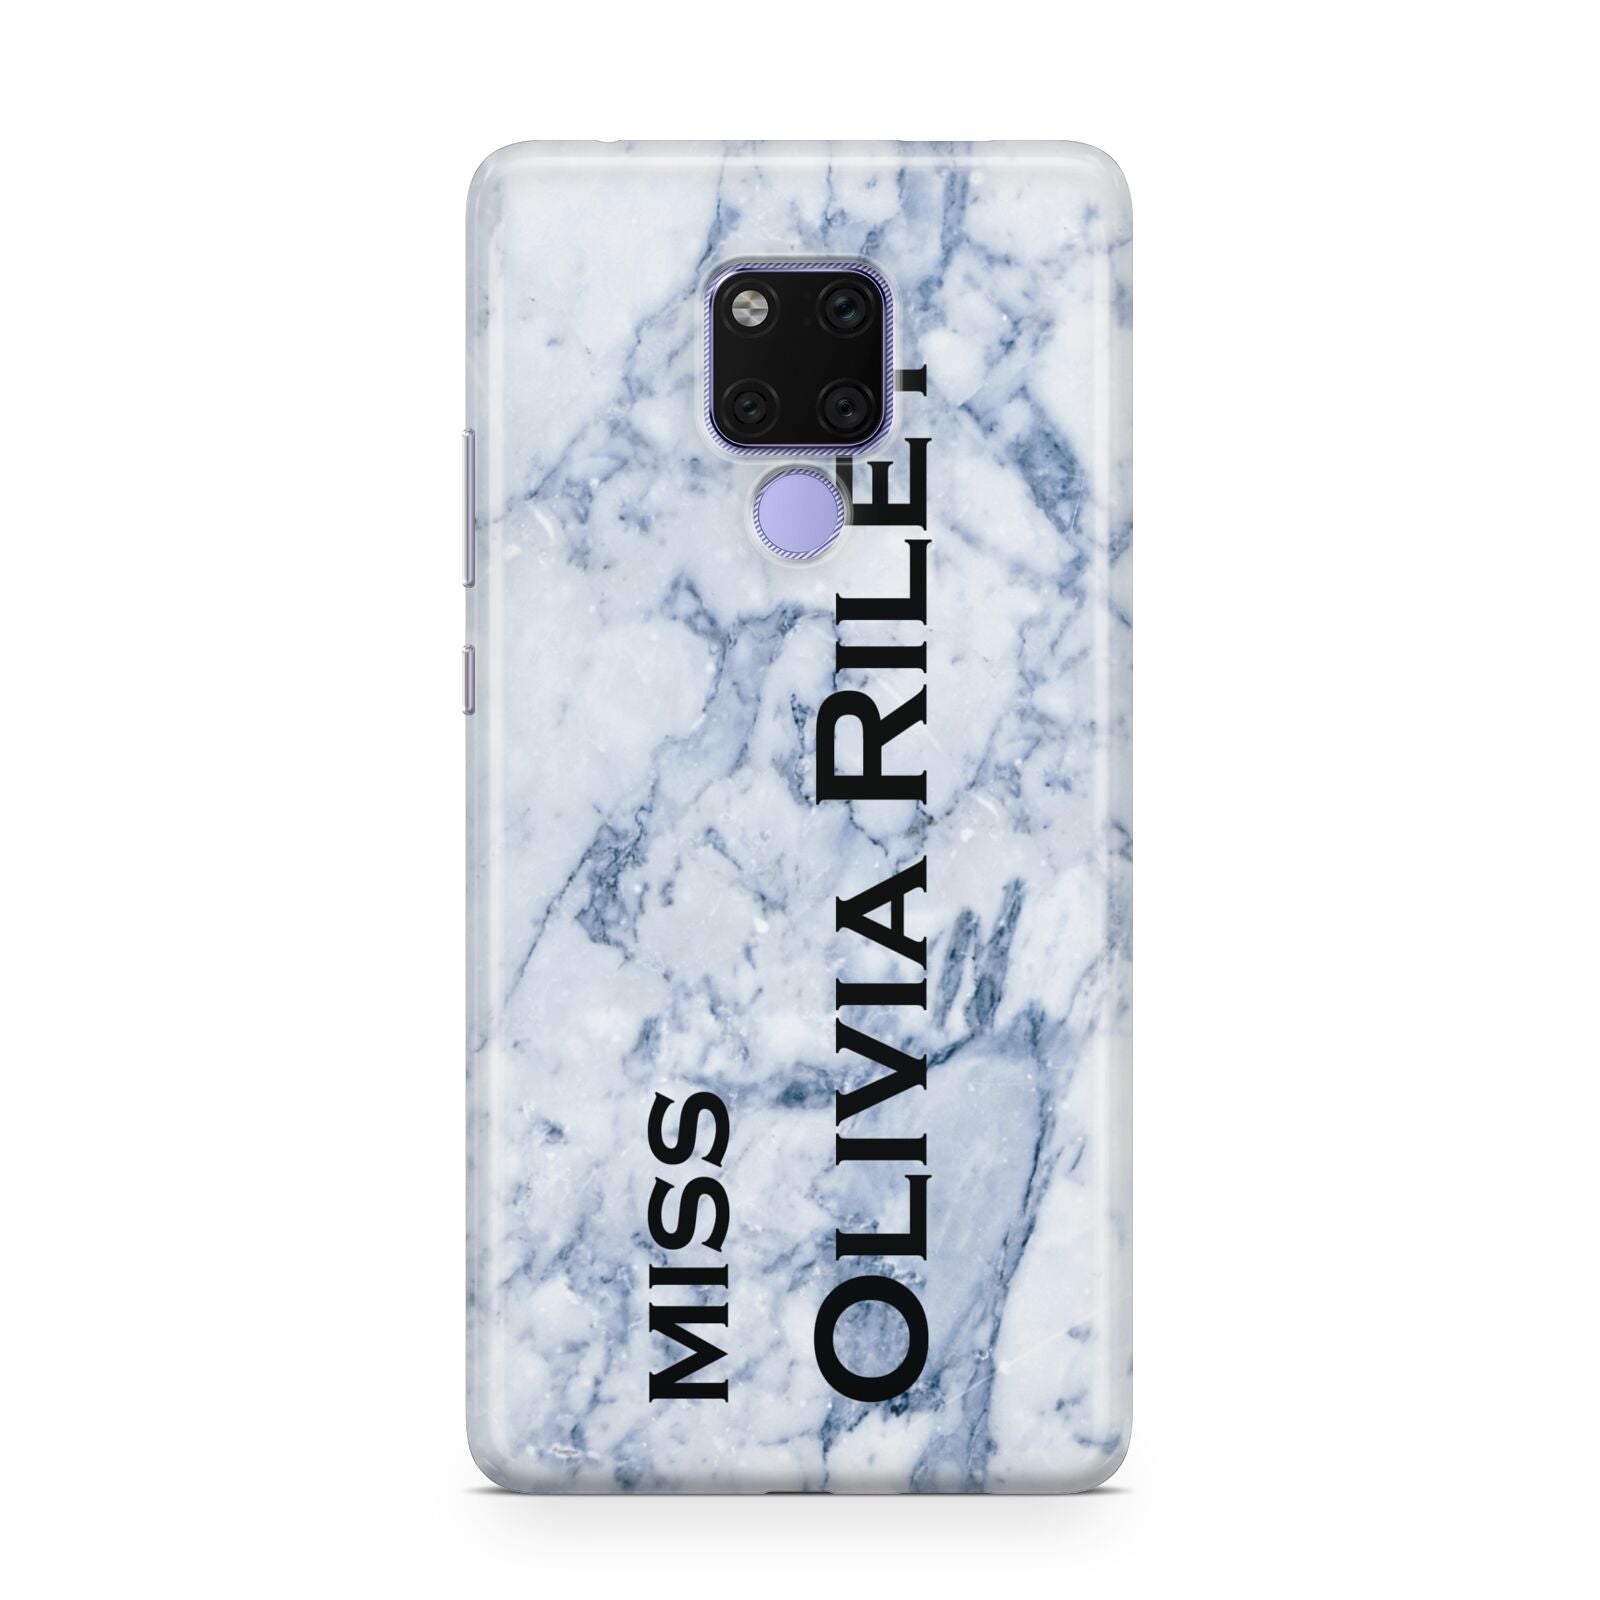 Full Name Grey Marble Huawei Mate 20X Phone Case